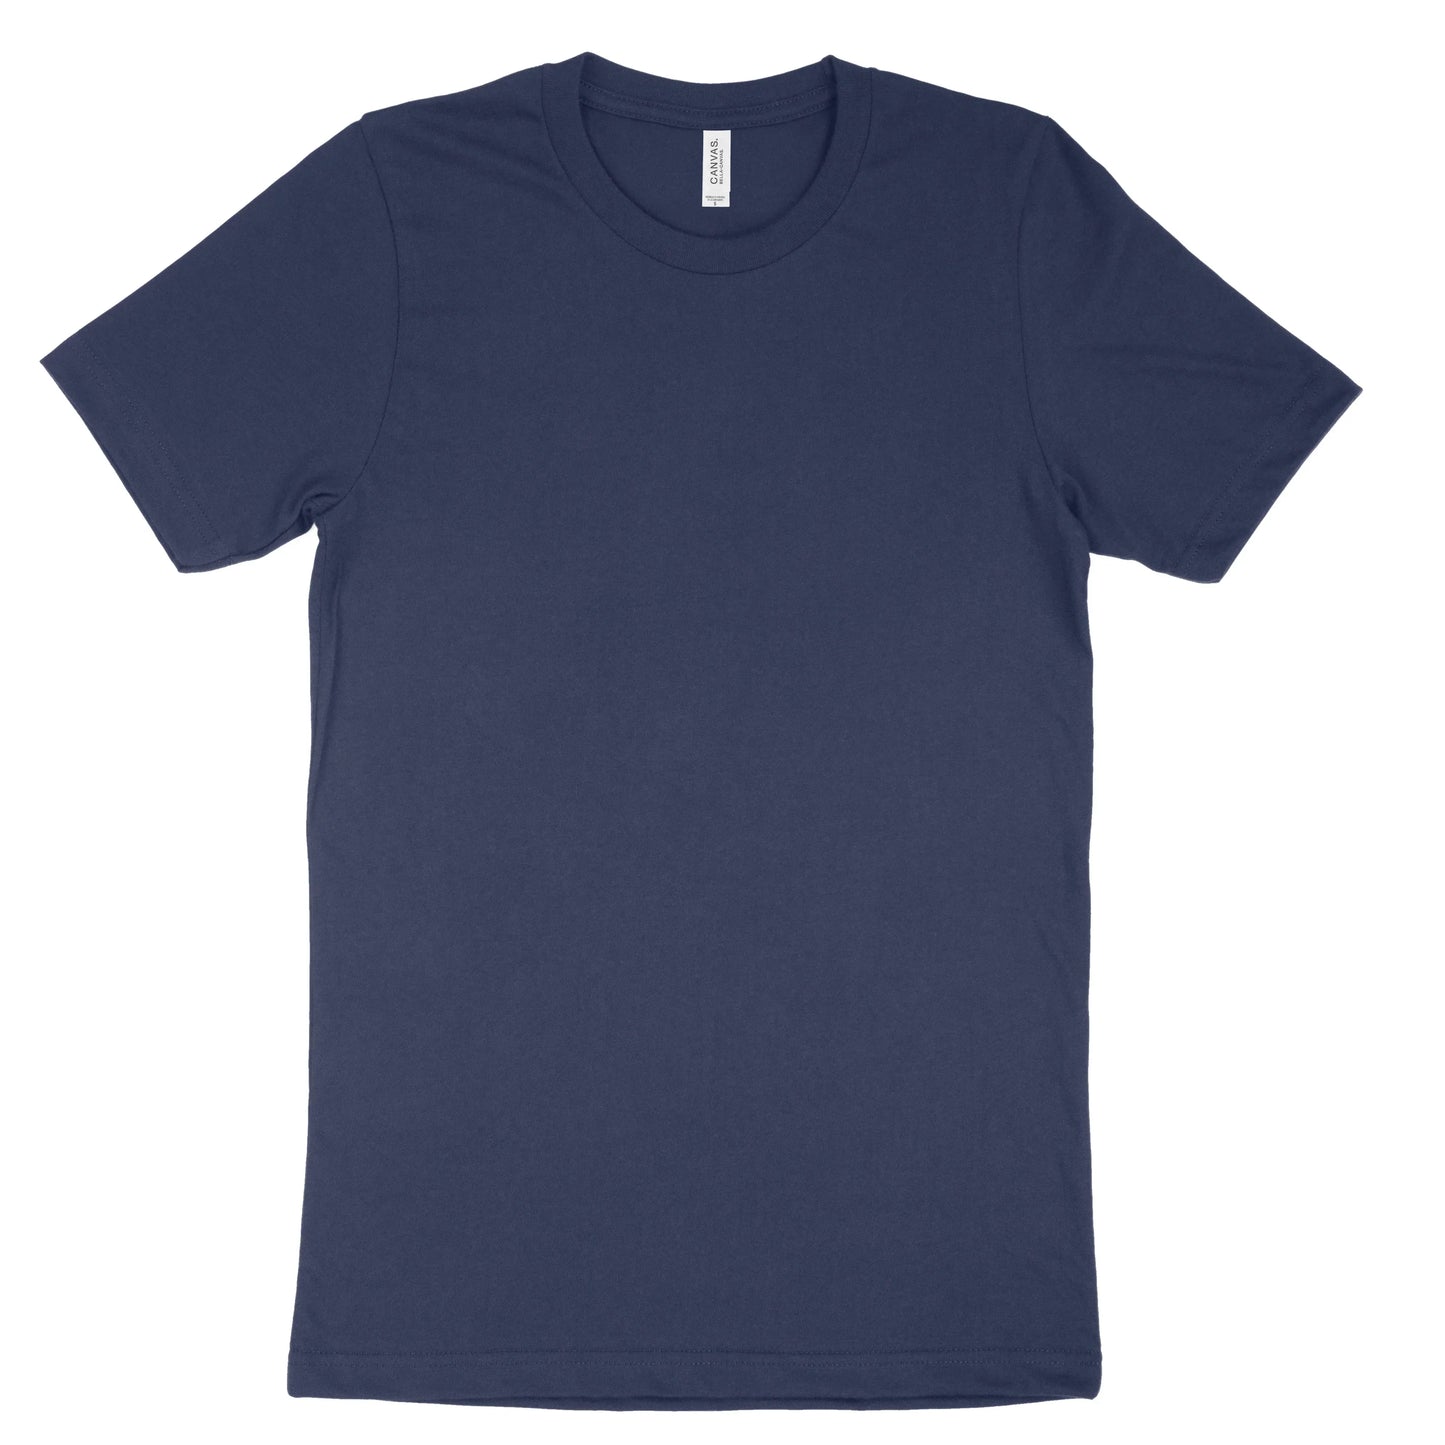 Configure my custom t-shirt for ActBlue - Eco